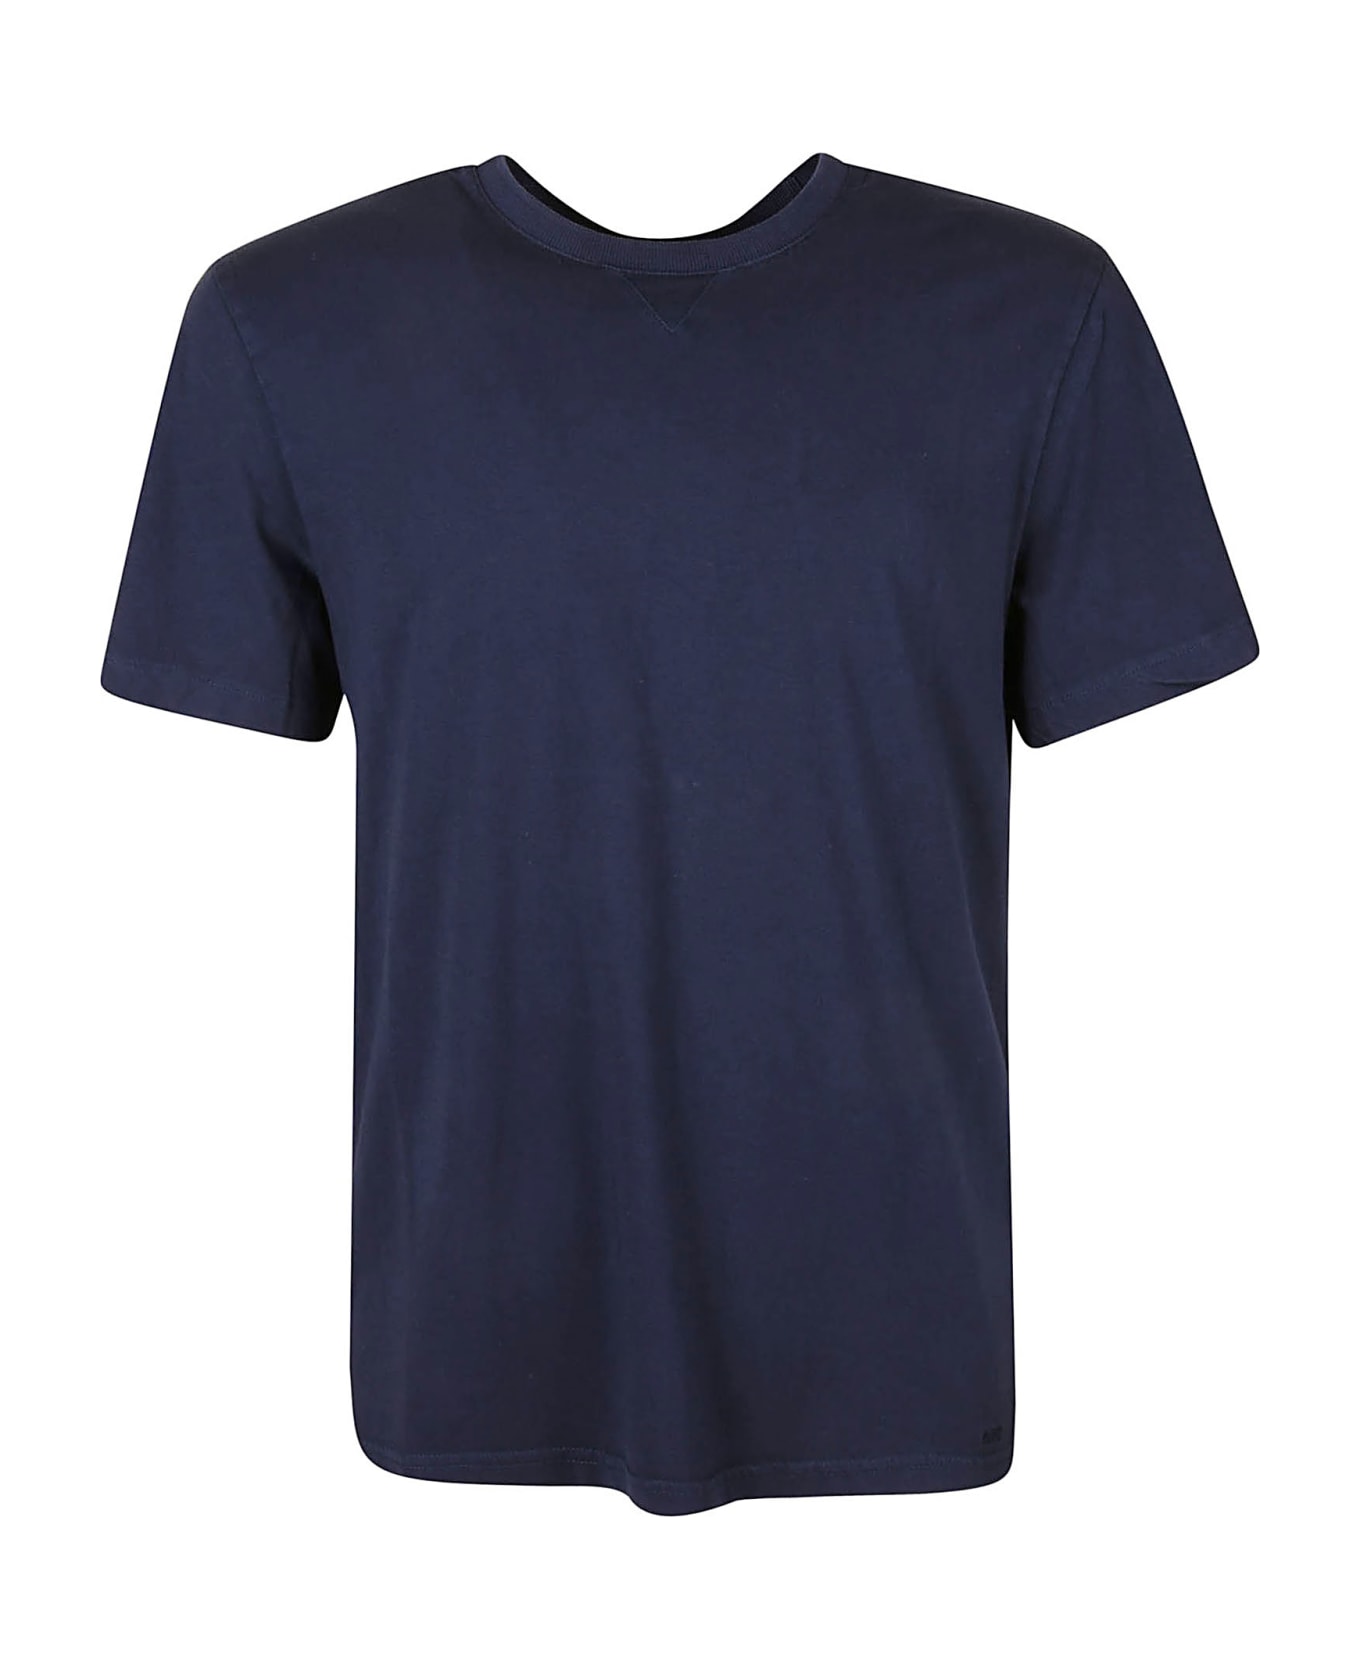 Michael Kors Spring 22 T-shirt - Midnight